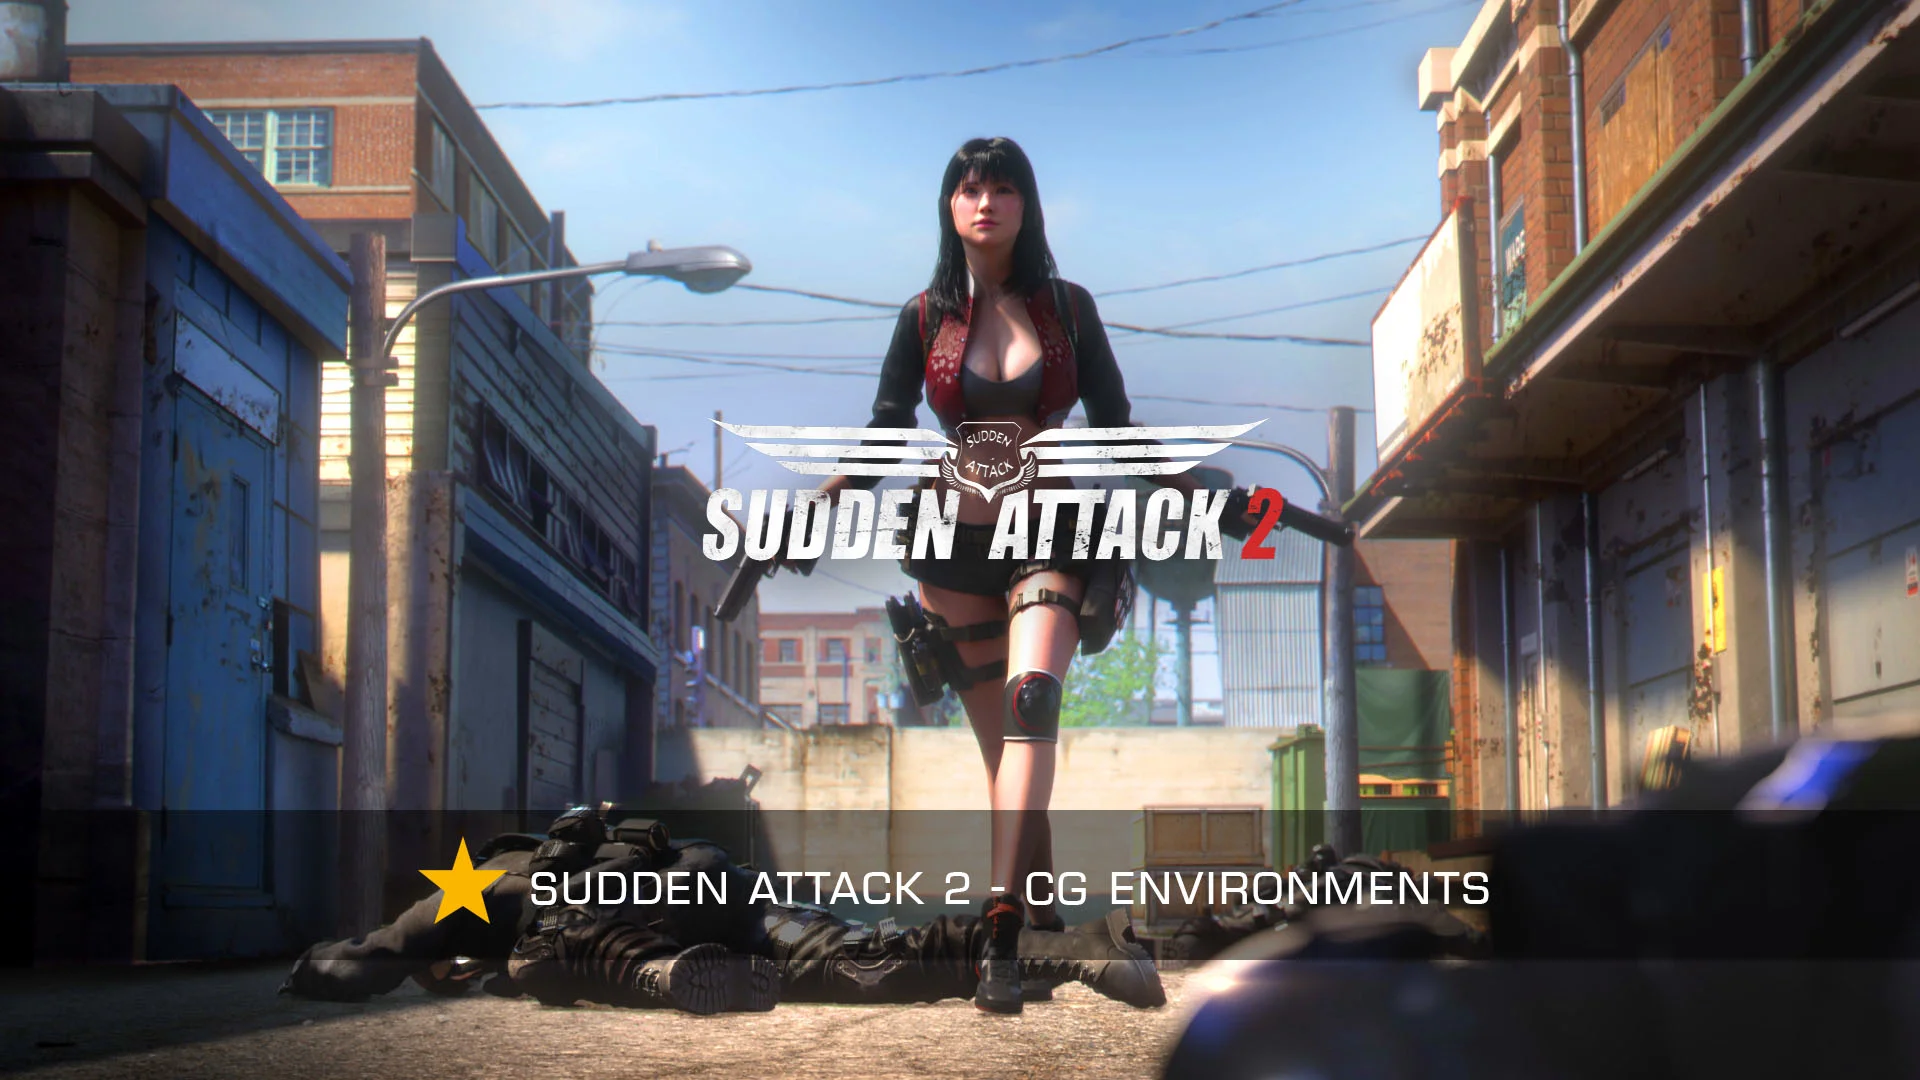 HD wallpaper: Video Game, Sudden Attack